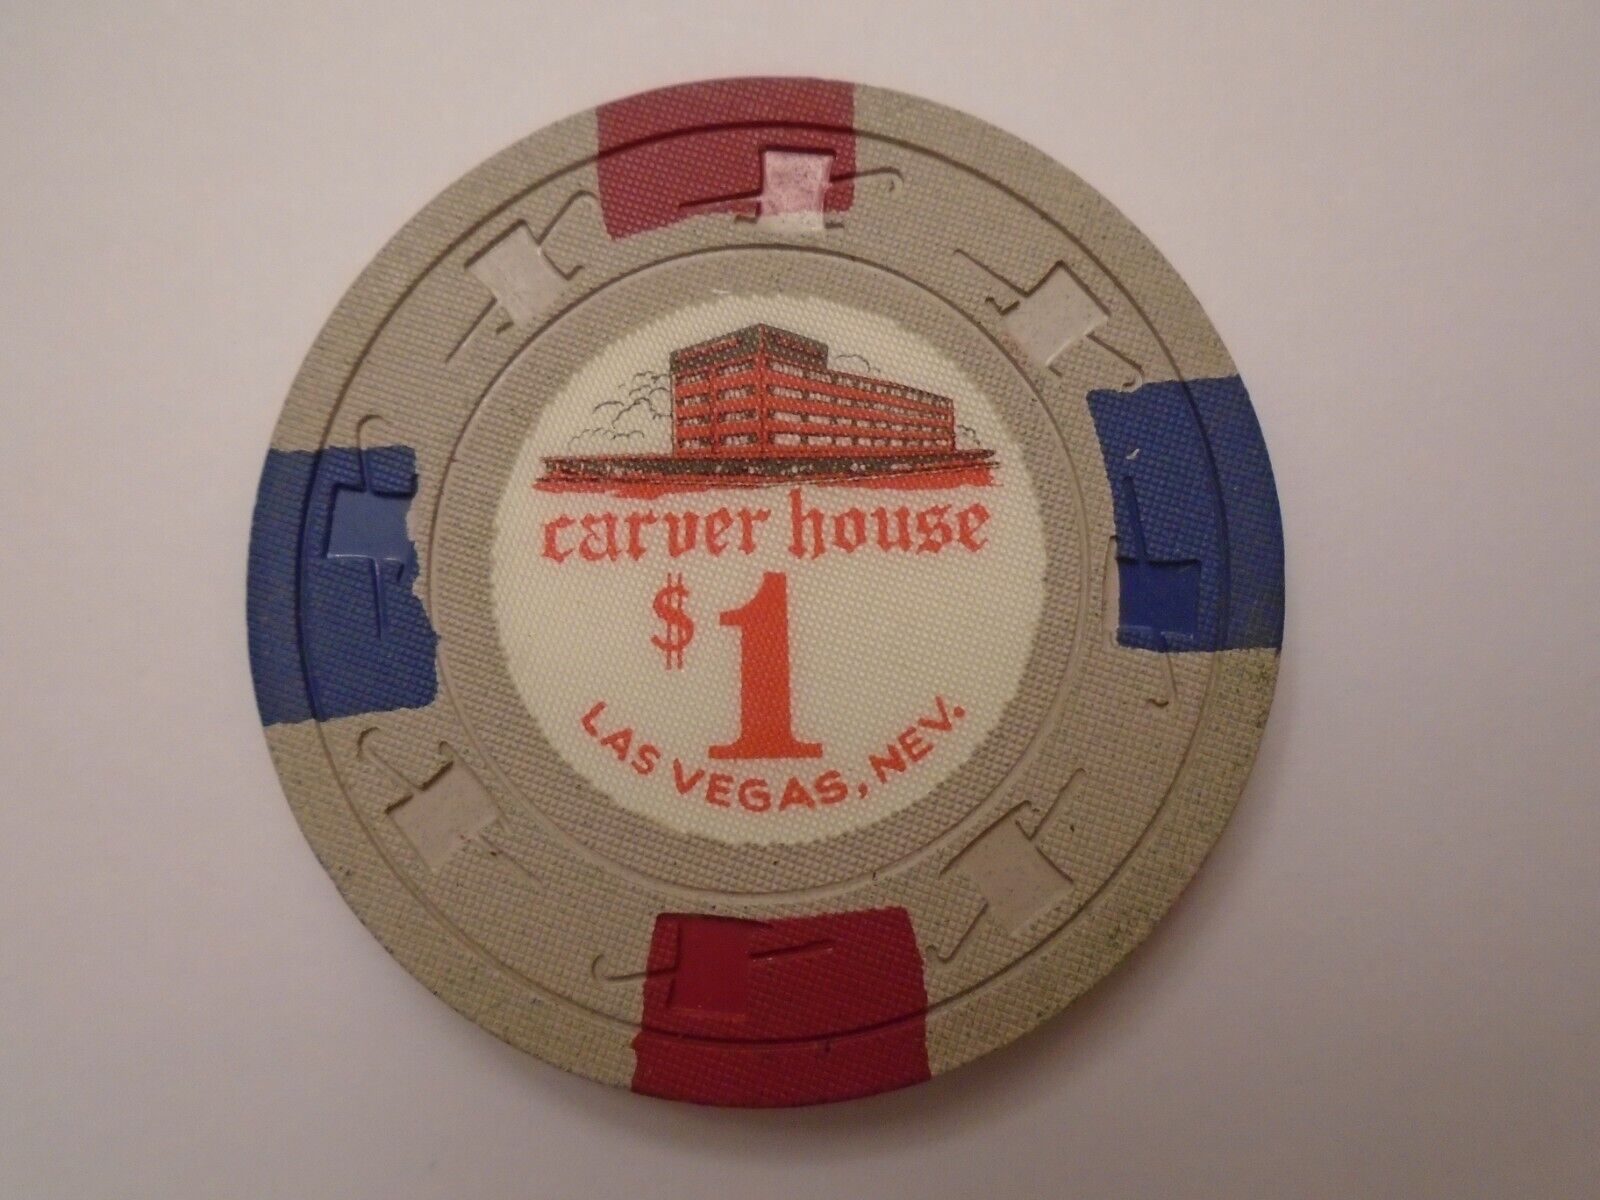 $1 CARVER HOUSE LAS VEGAS Nevada Casino Poker Chip